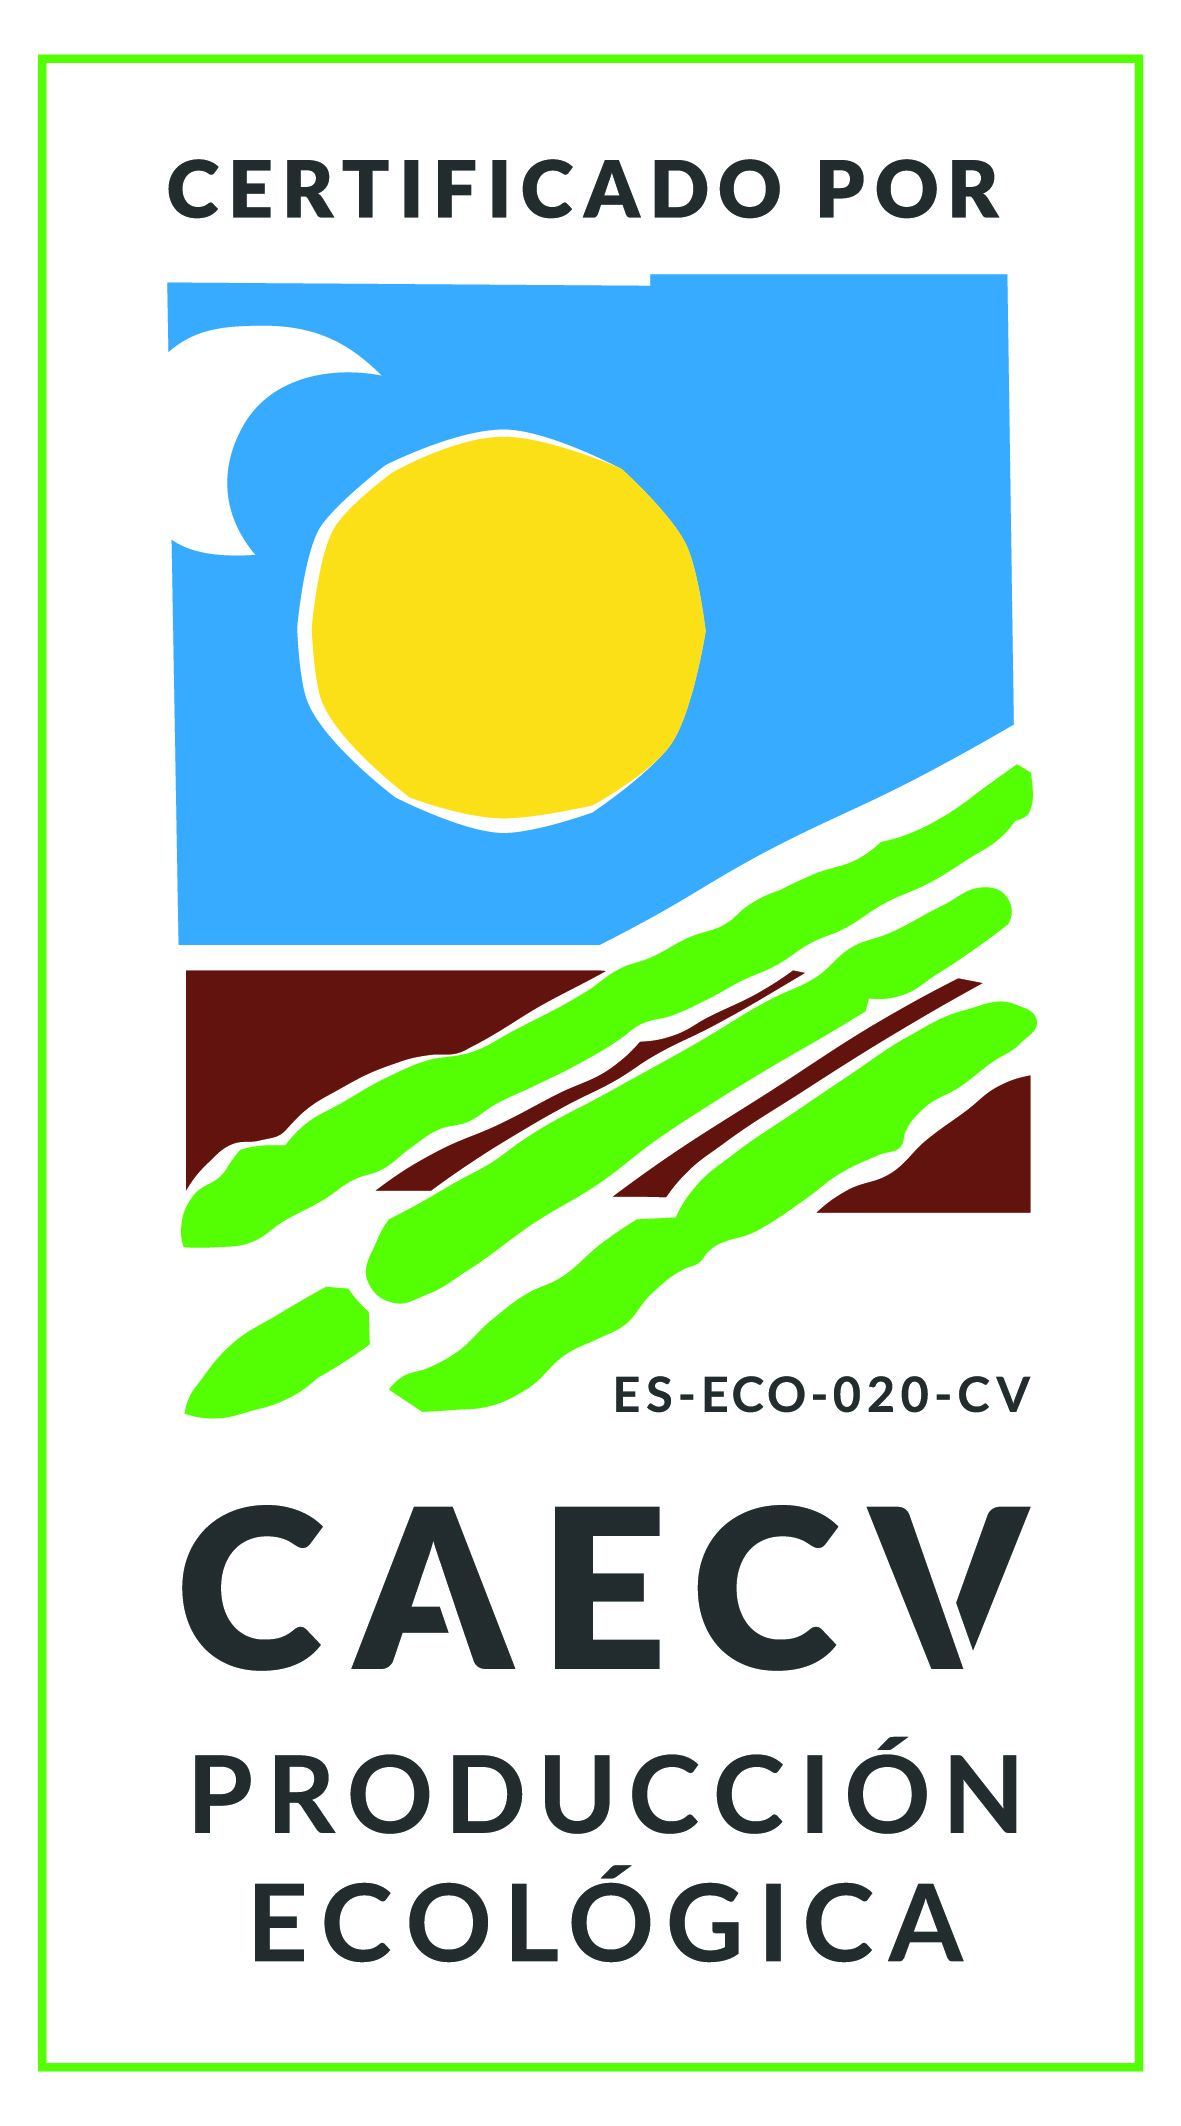 CAECV